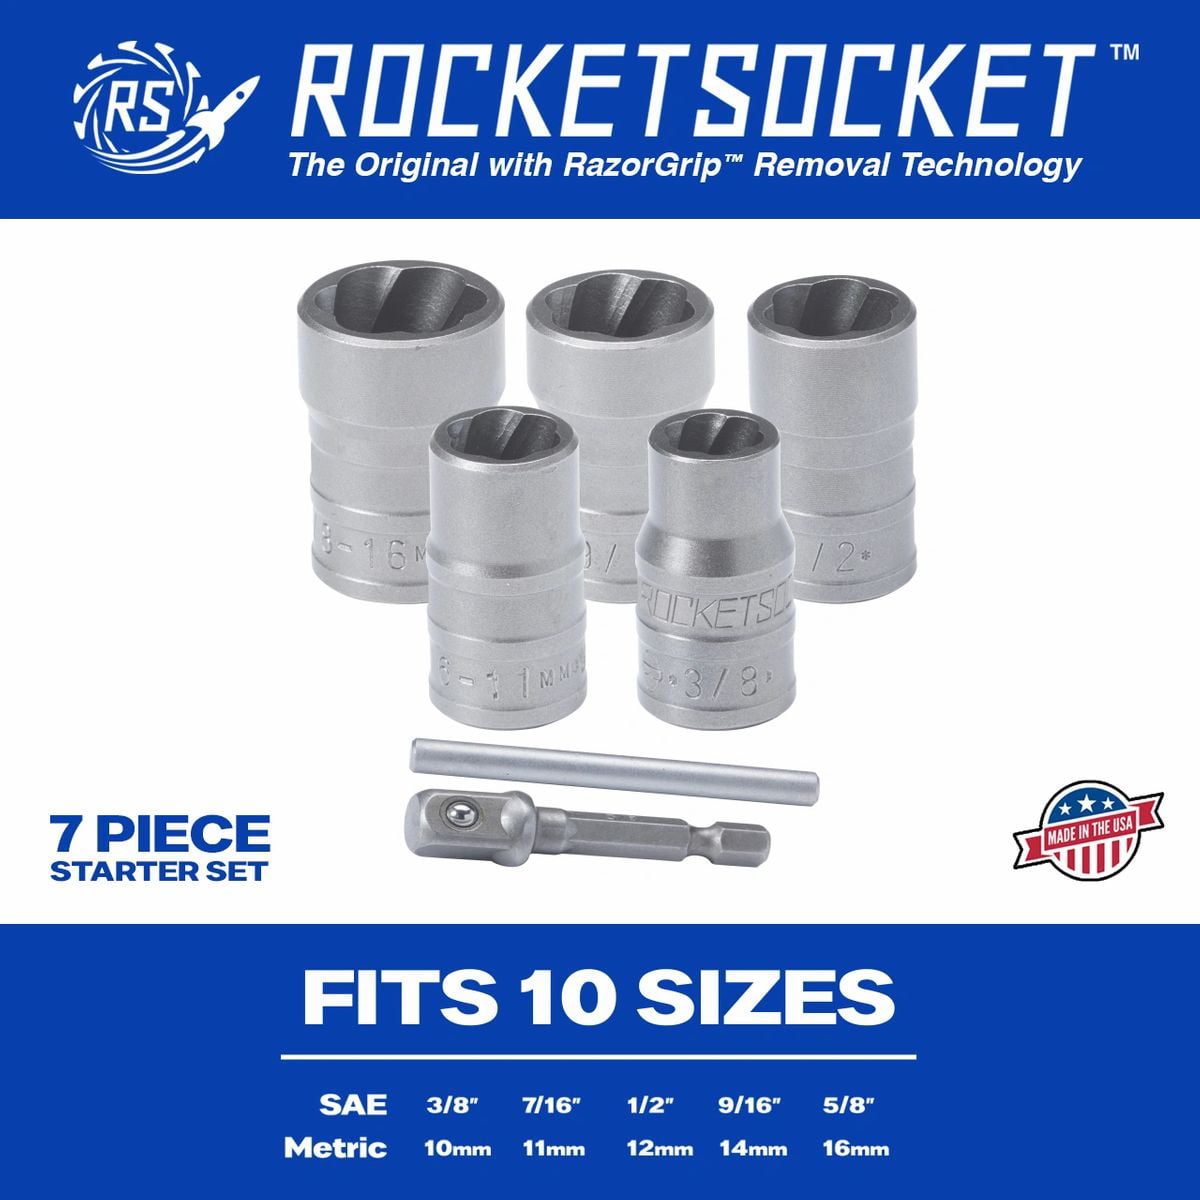 Bolt ROCKETSOCKET 3/8" Drive Nut & Screw Extraction Sockets 6 pieces 